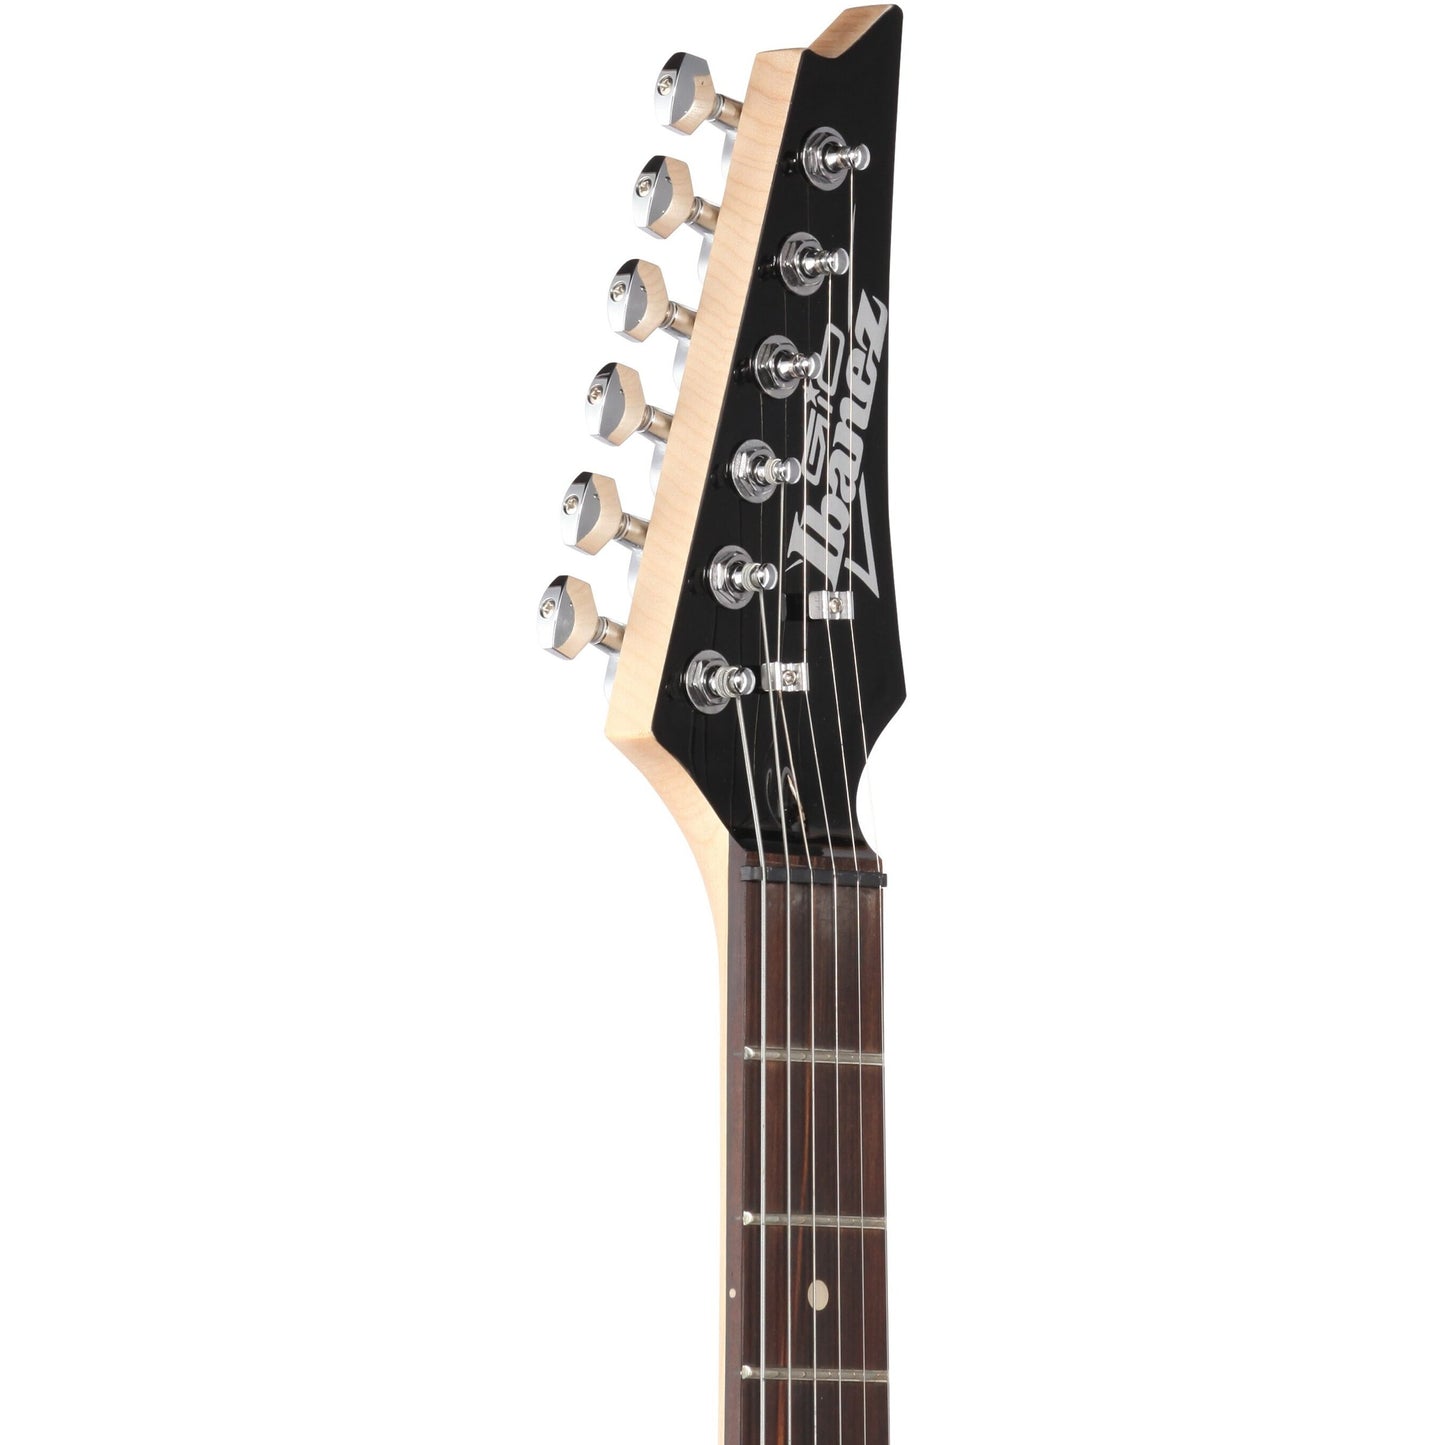 Ibanez GRX70QA Electric Guitar, Transparent Black Sunburst